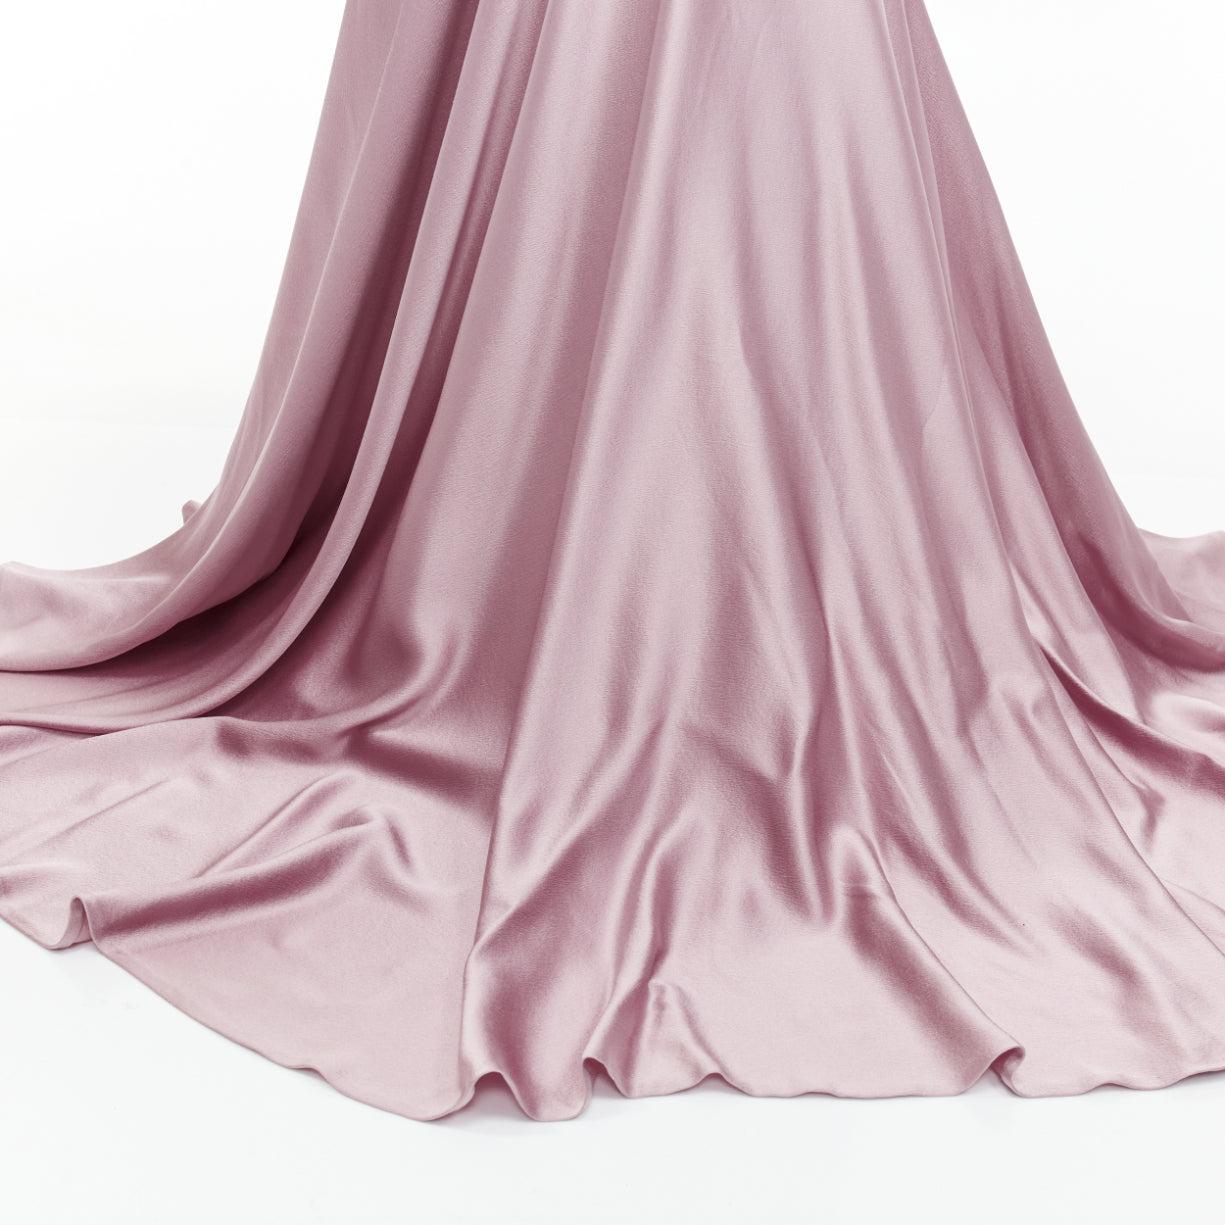 ALEXANDER MCQUEEN 2006 lilac black lace one shoulder bias gown dress IT40 S For Sale 6